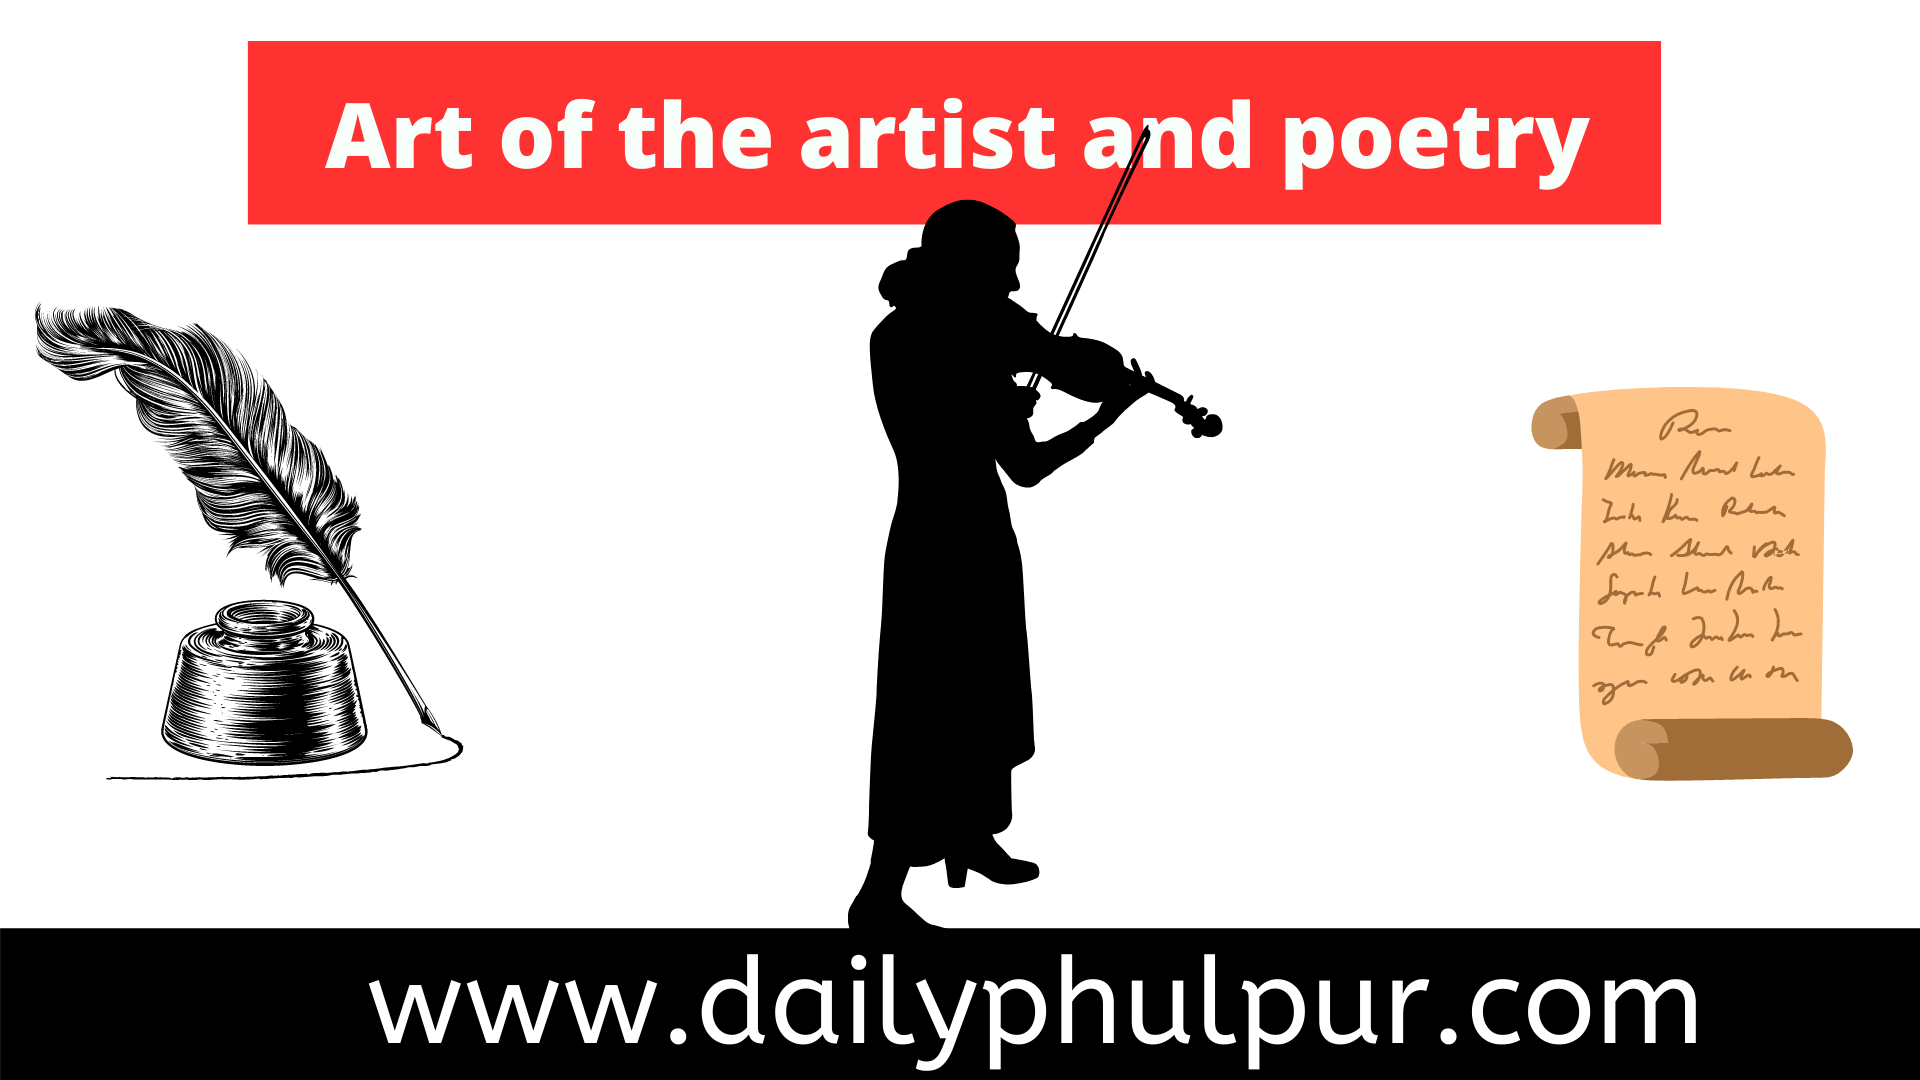 www.dailyphulpur.com